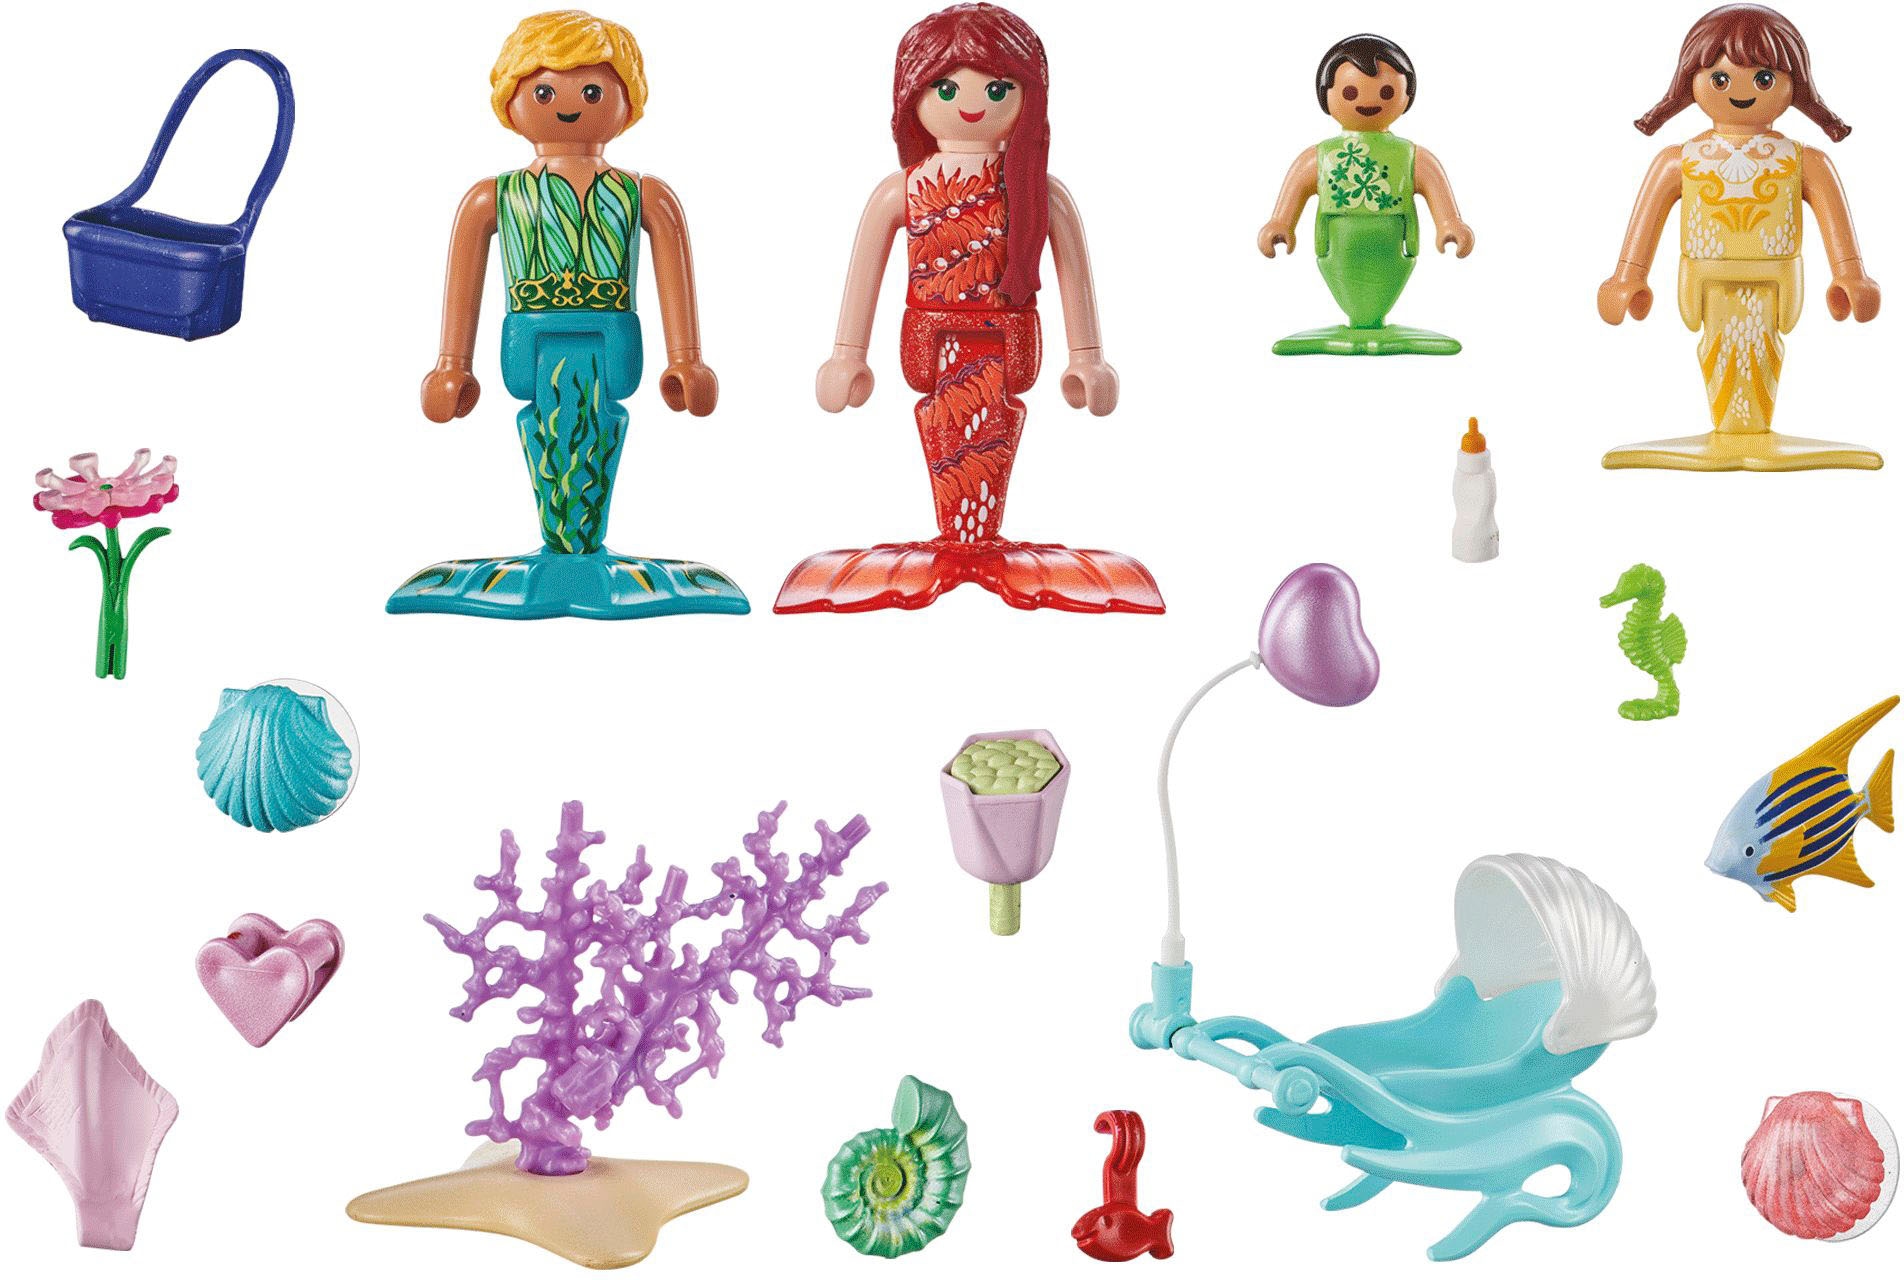 Playmobil® Konstruktions-Spielset »Ausflug der Meerjungfrauenfamilie (71469), Princess Magic«, (30 St.), teilweise aus recyceltem Material; Made in Europe